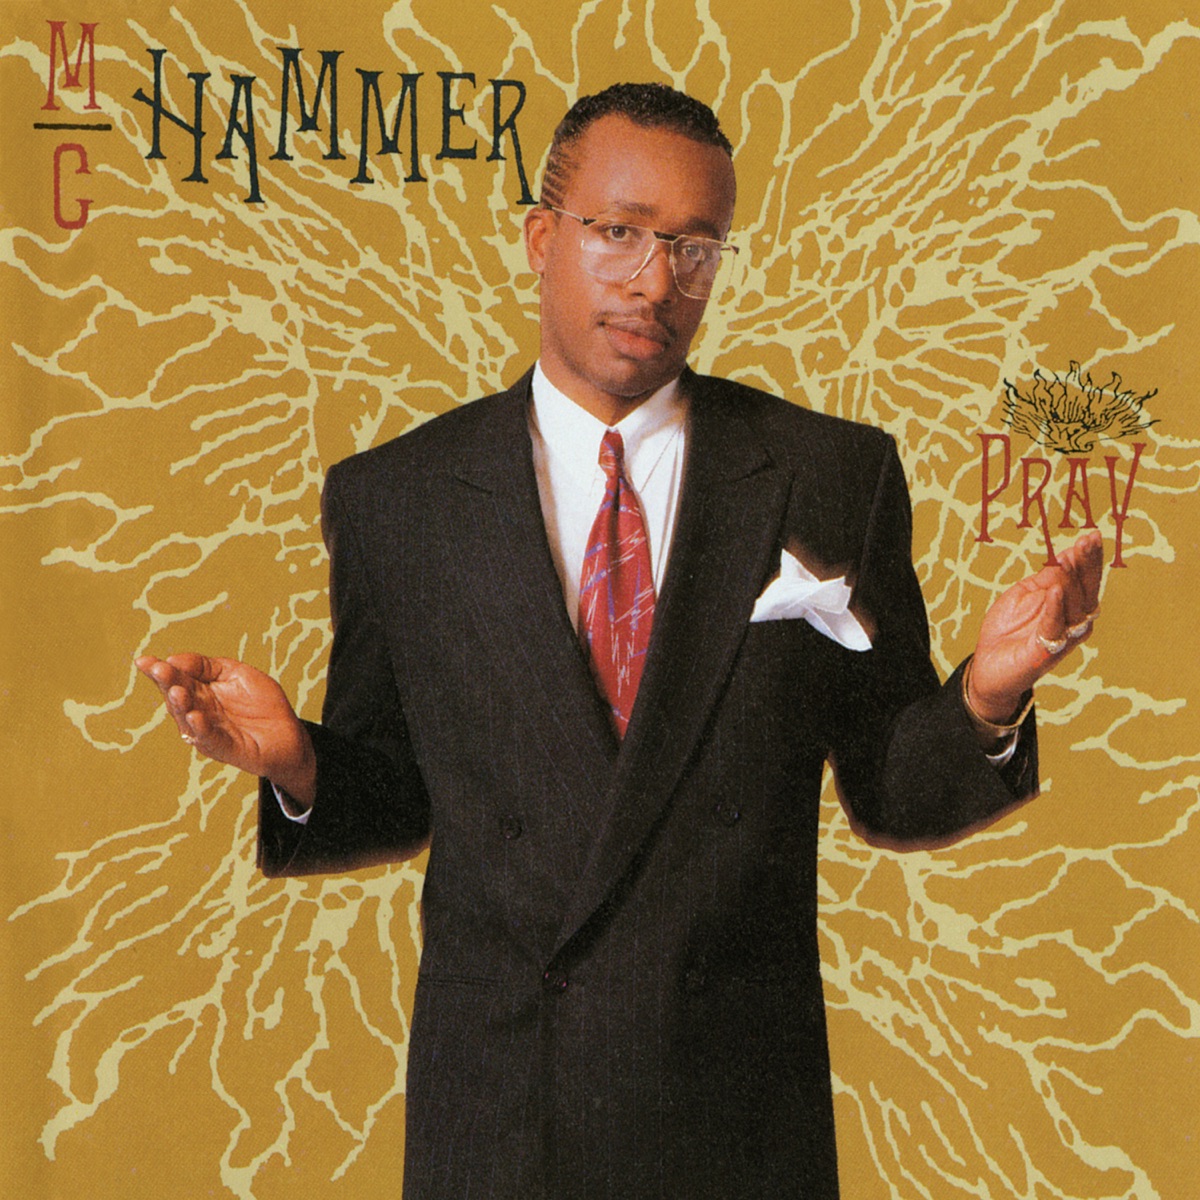 Greatest Hits - Album by MC Hammer - Apple Music